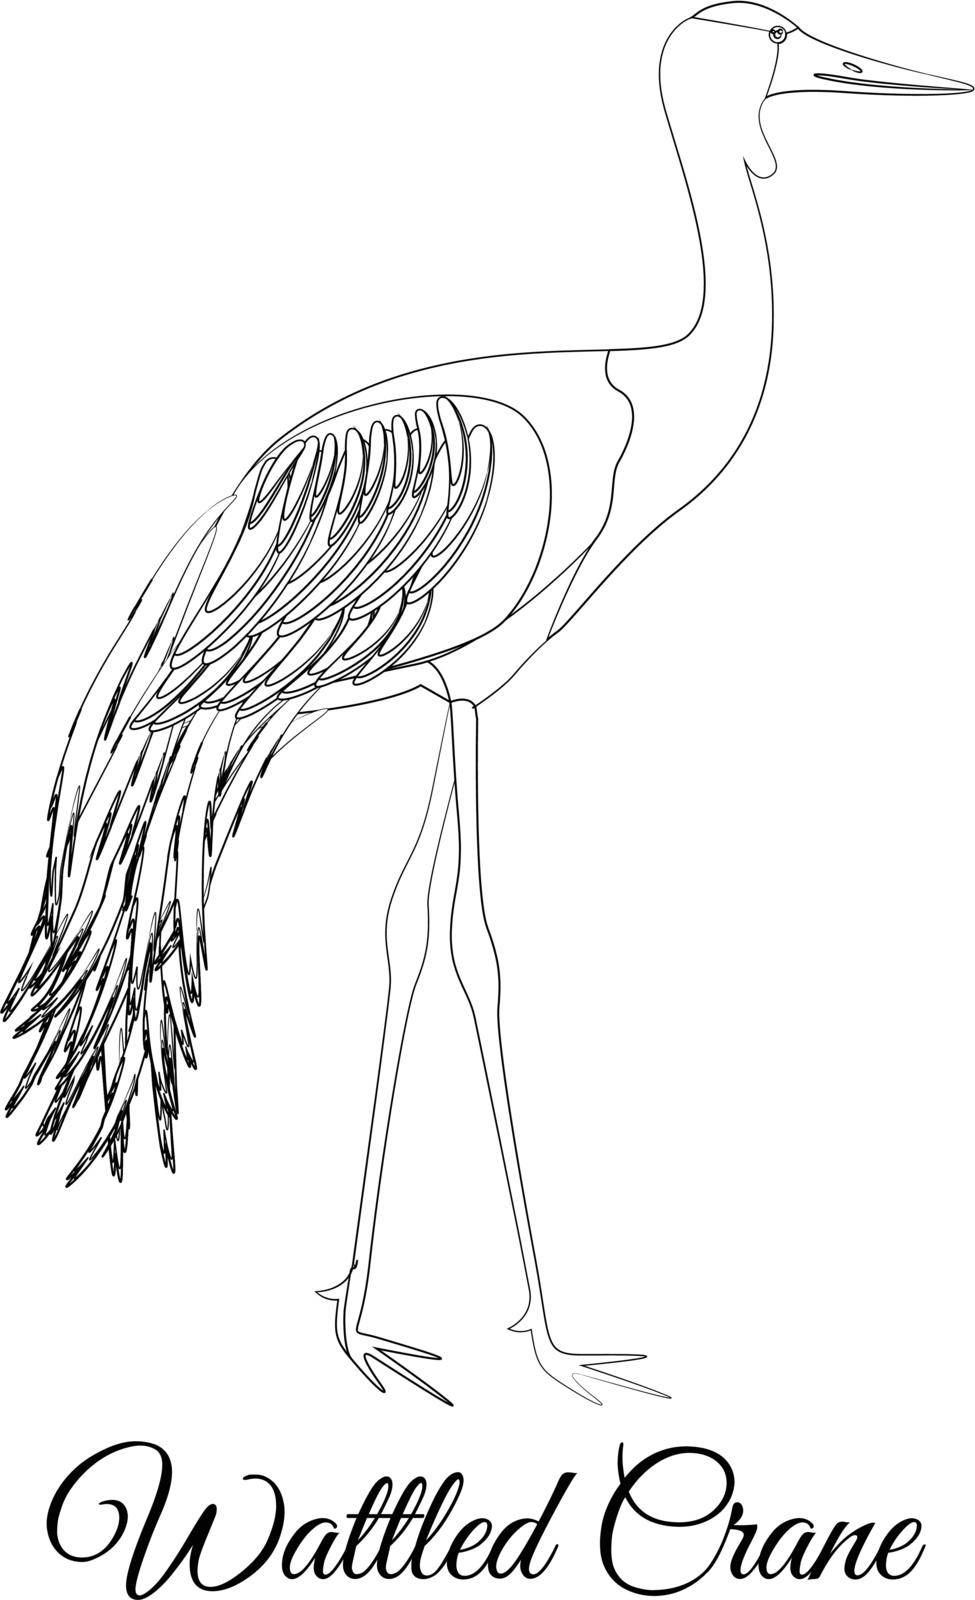 Wattled crane outline vector illustration